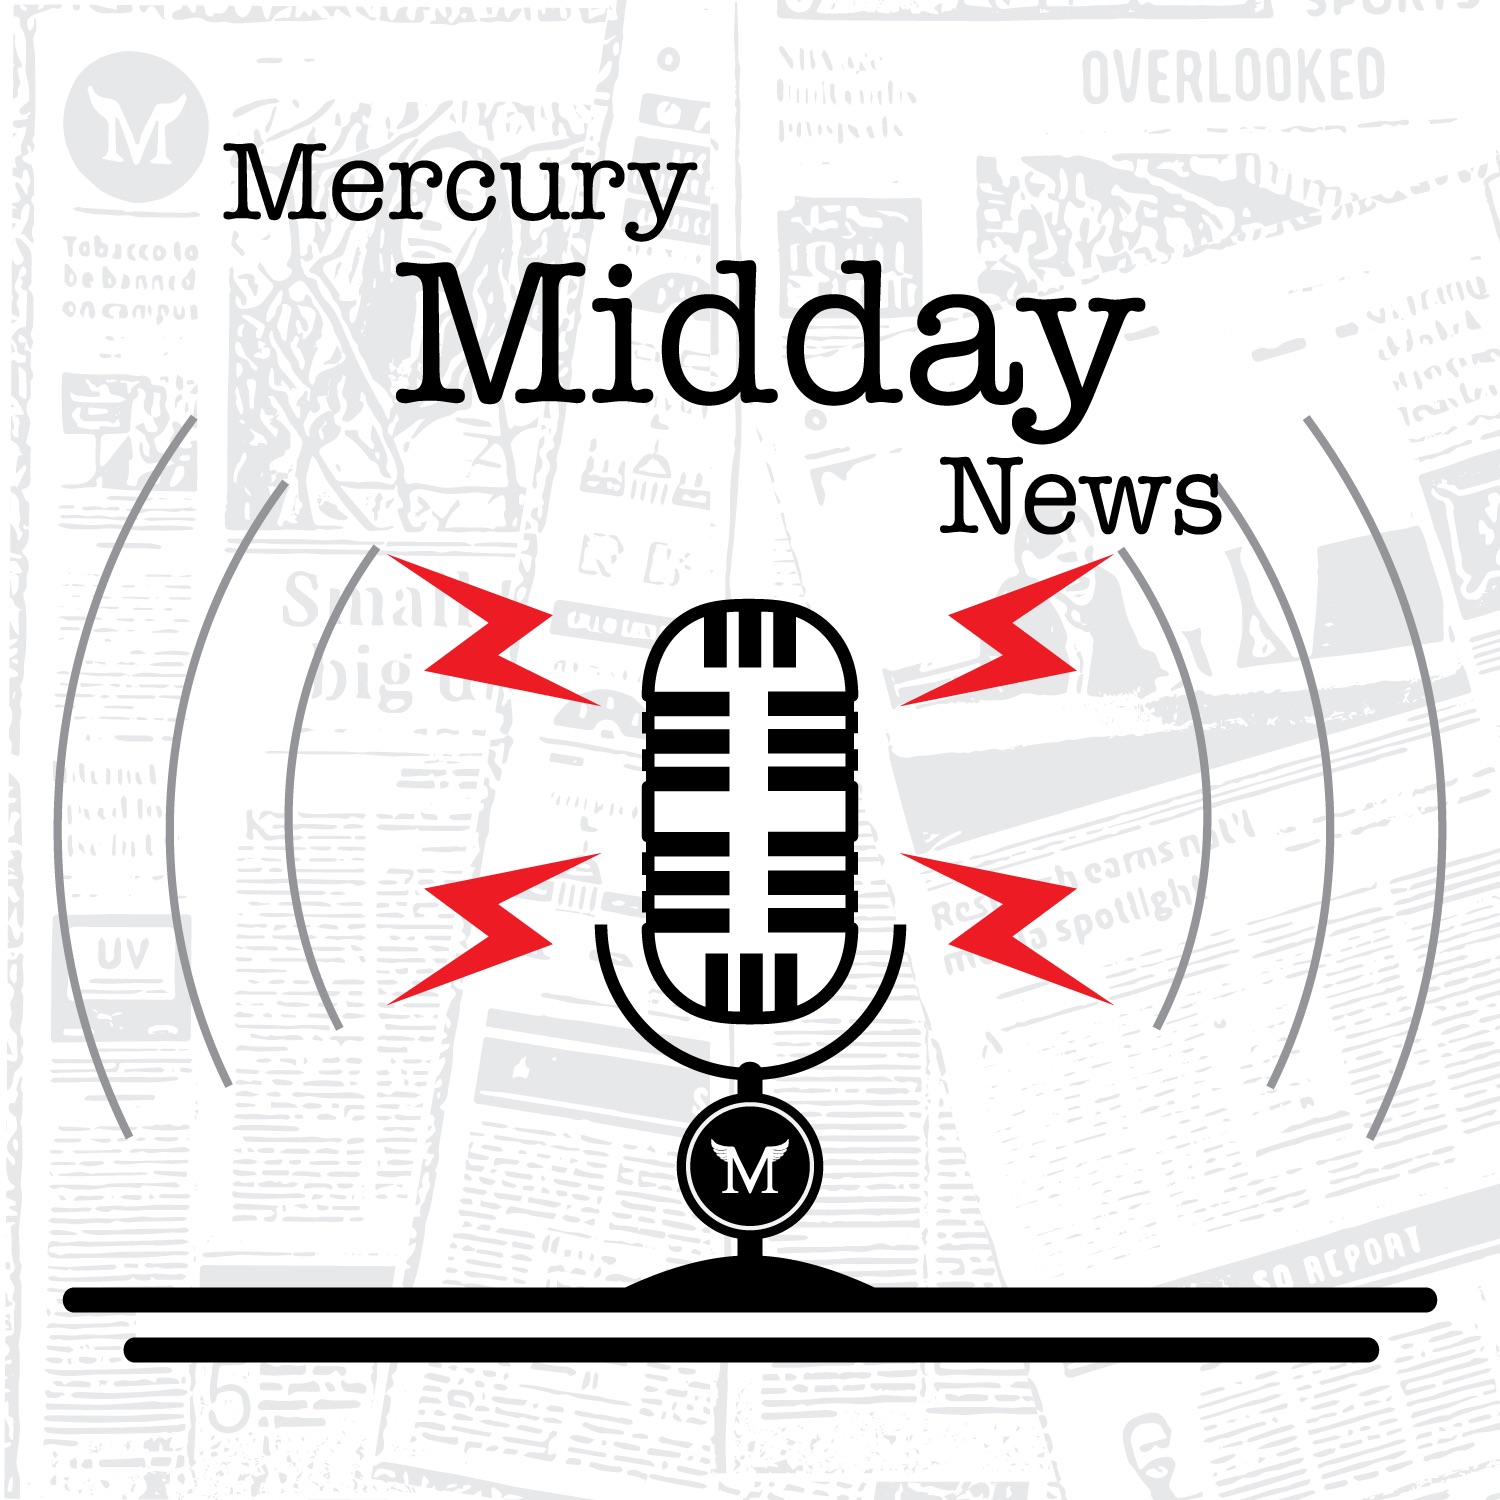 Mercury Midday News 3/23/17